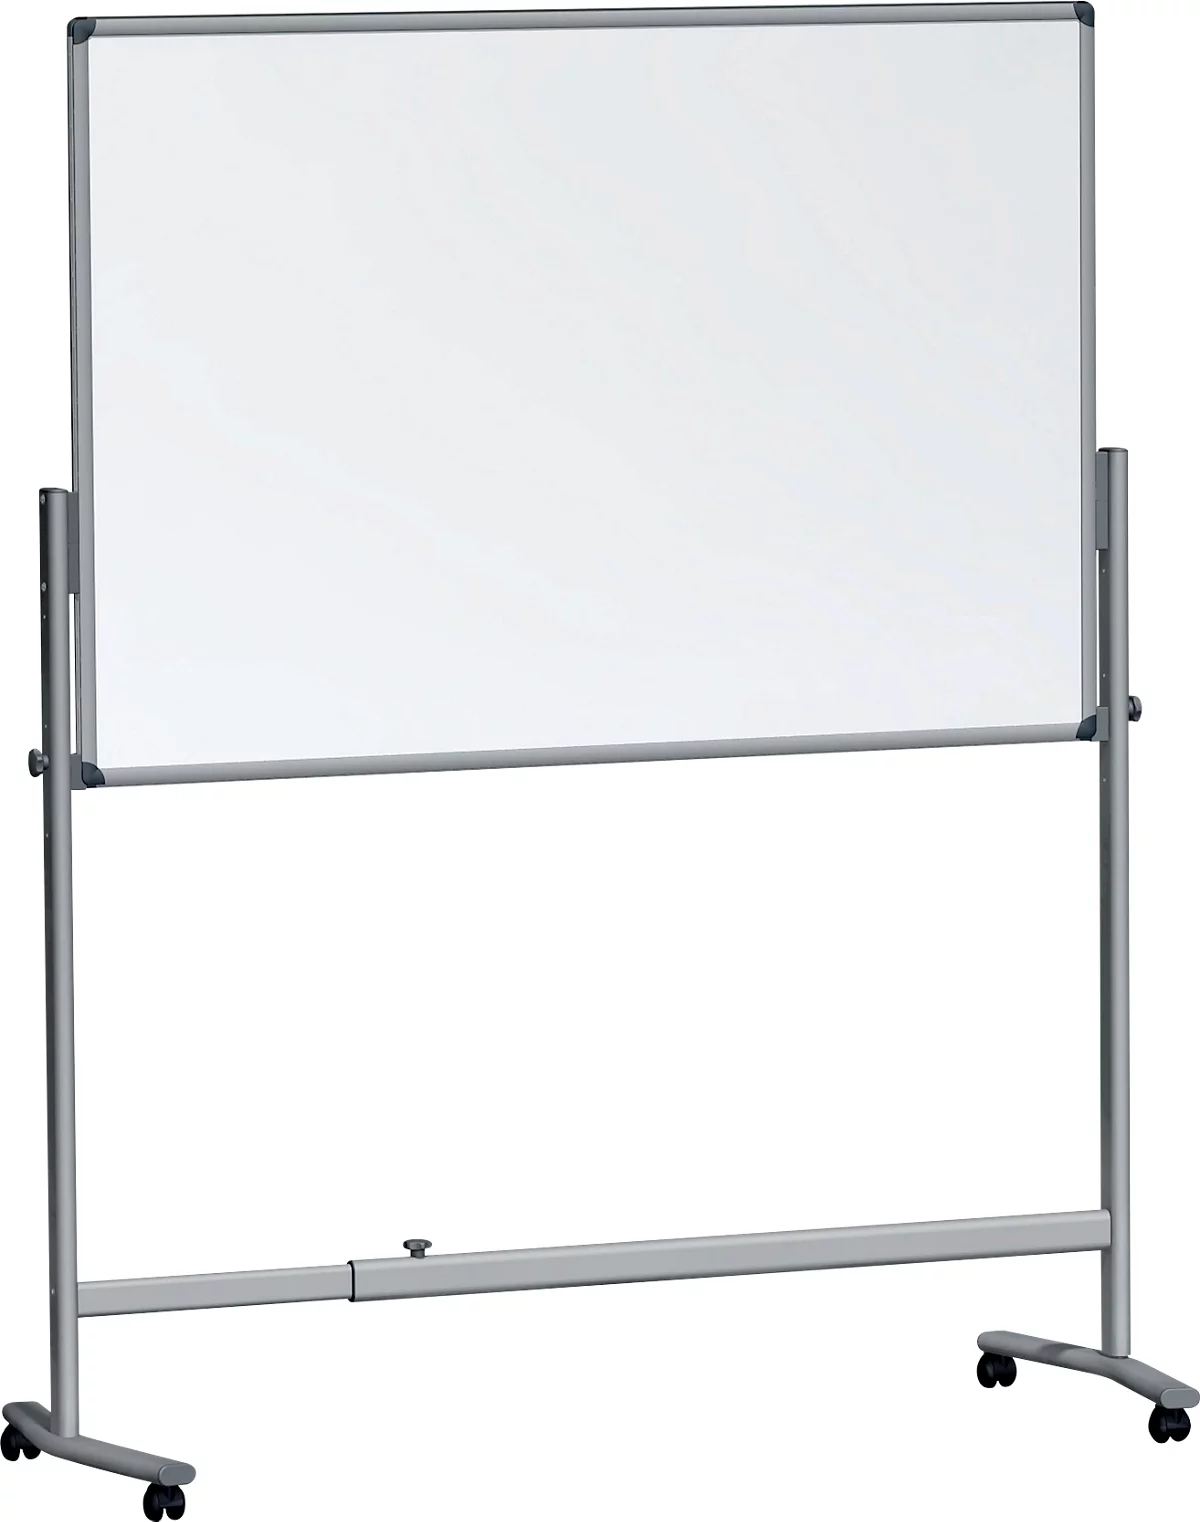 Mobiles Stativ Pro Line Tafelsystem STM820, fahrbar, feststellbar, höhen- und breitenverstellbar, 1450 - 2050 mm